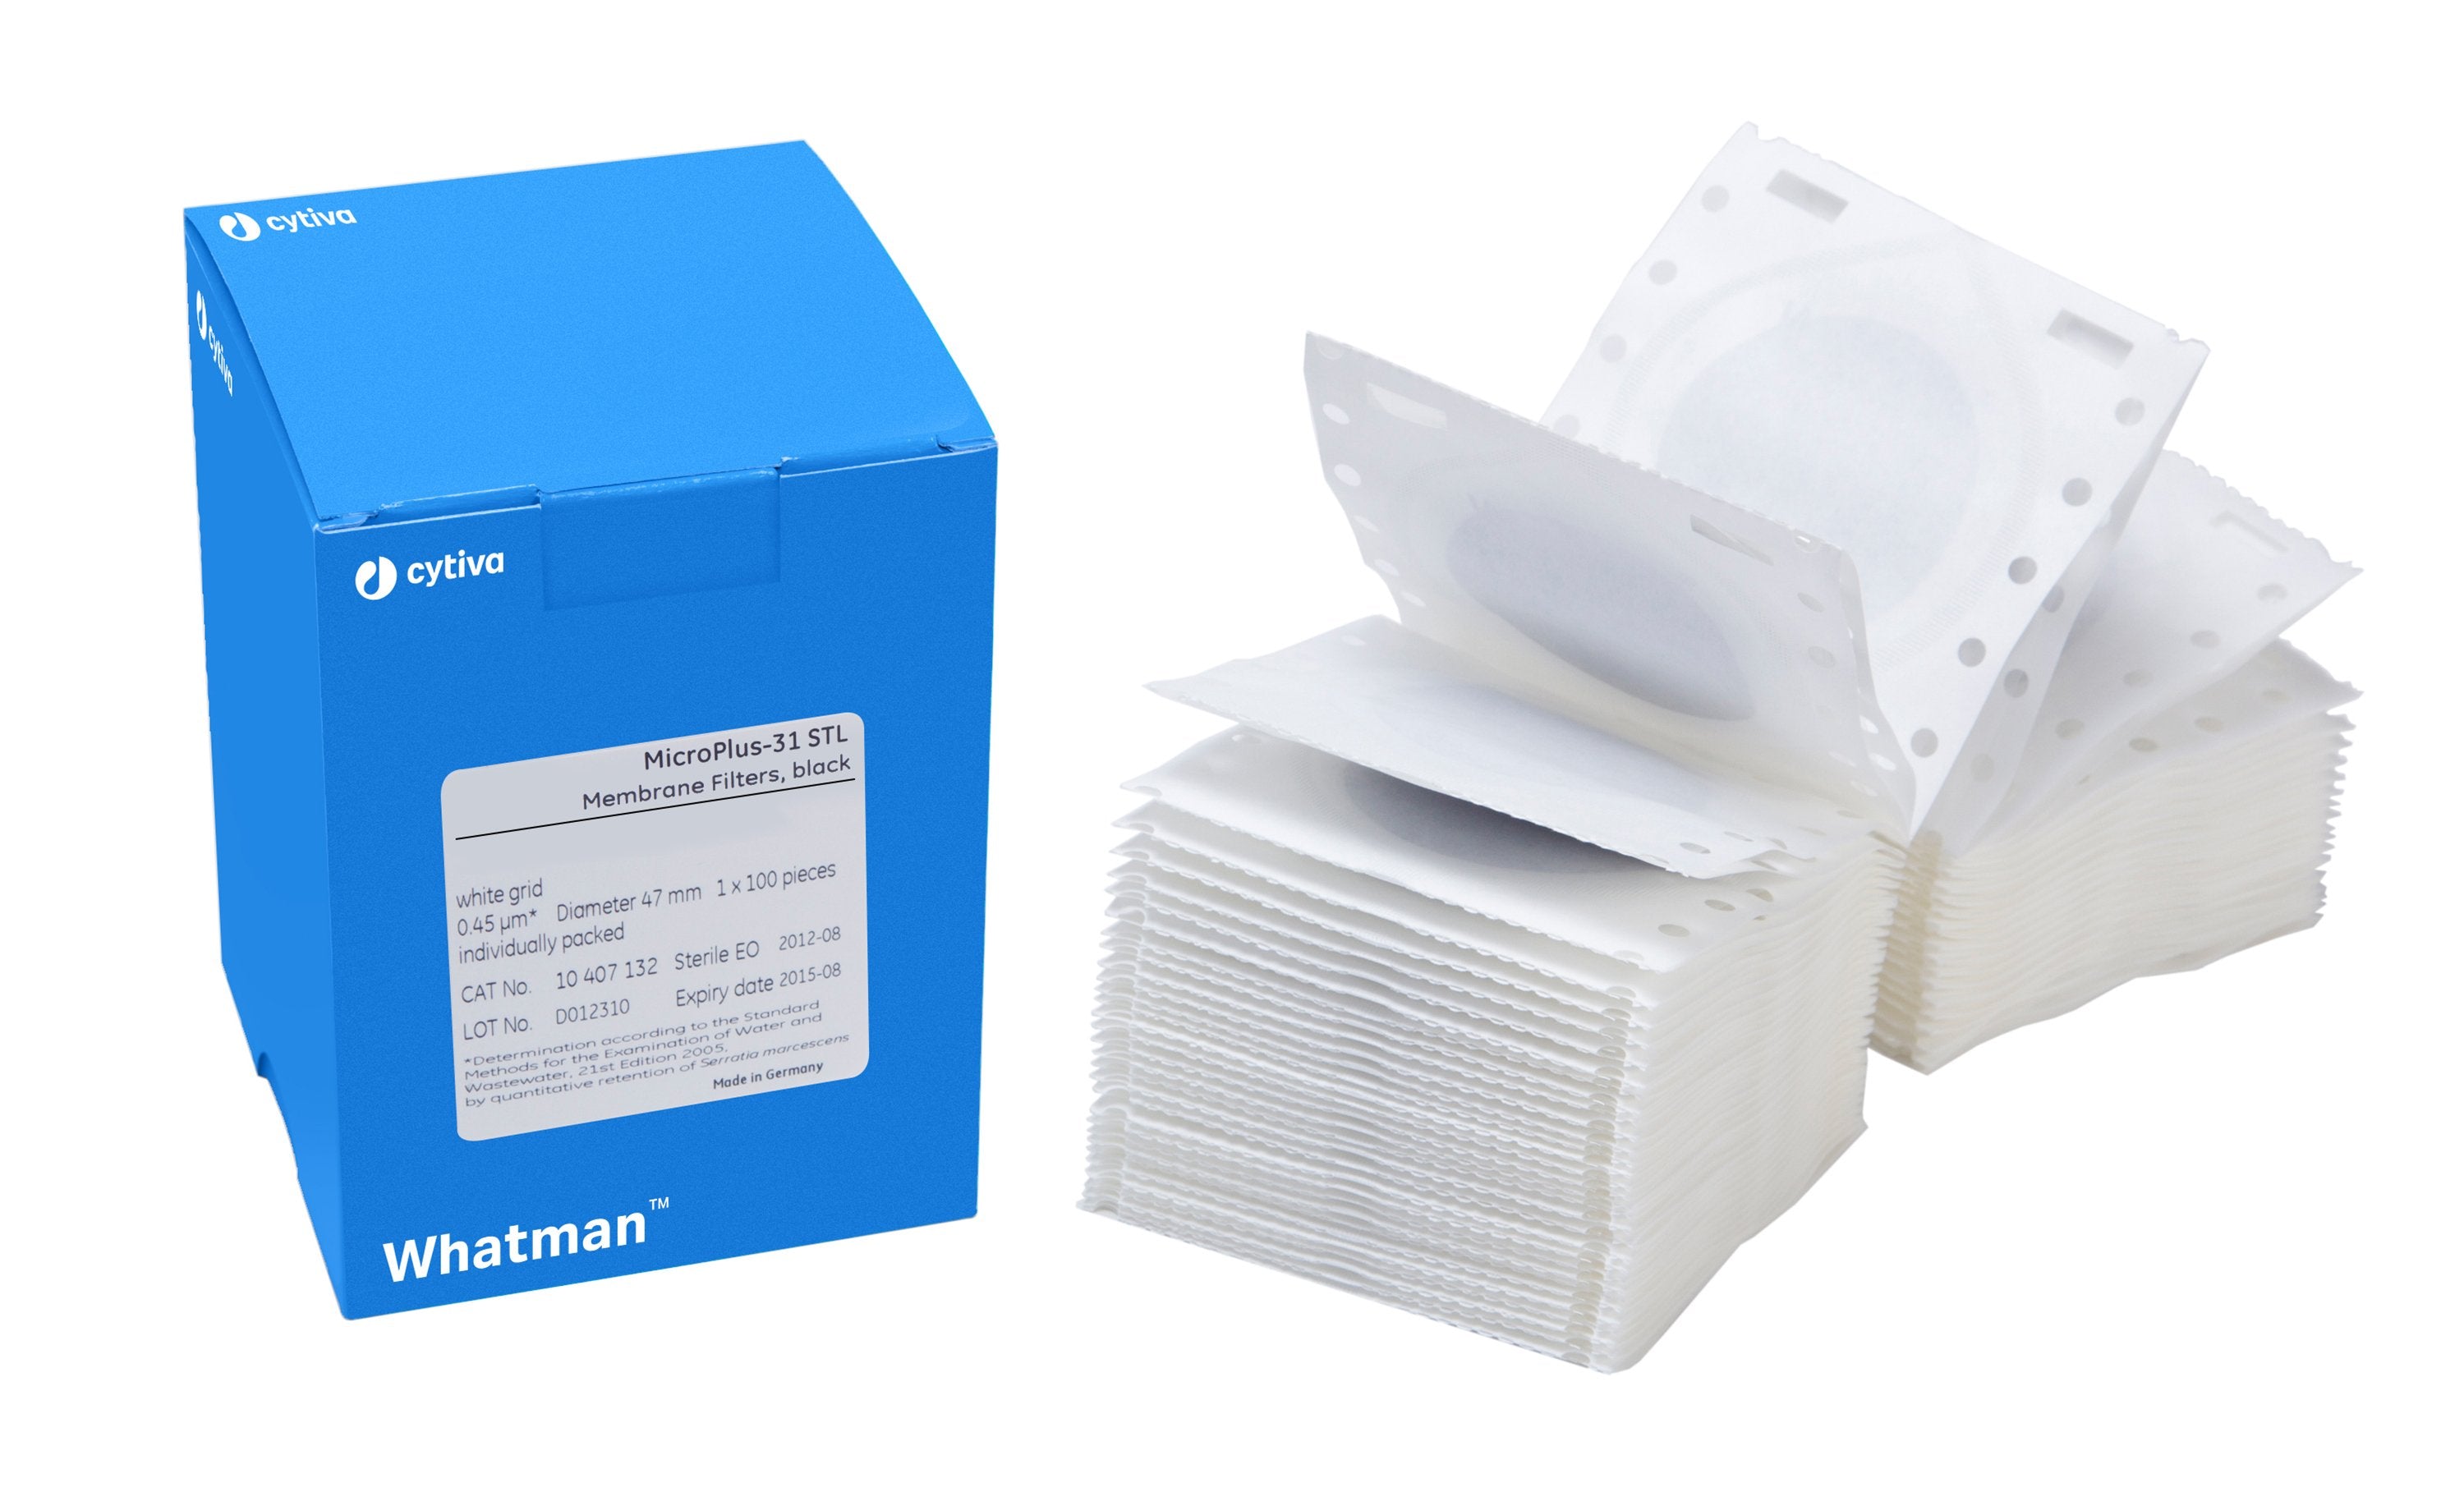 Whatman 10407134 MicroPlus-31, 50mm Dia, Black, White Grid, Sterile For Use with Whatman Membrane-Butler, 100/pk, 4 pk/bx (PN: 10407134)